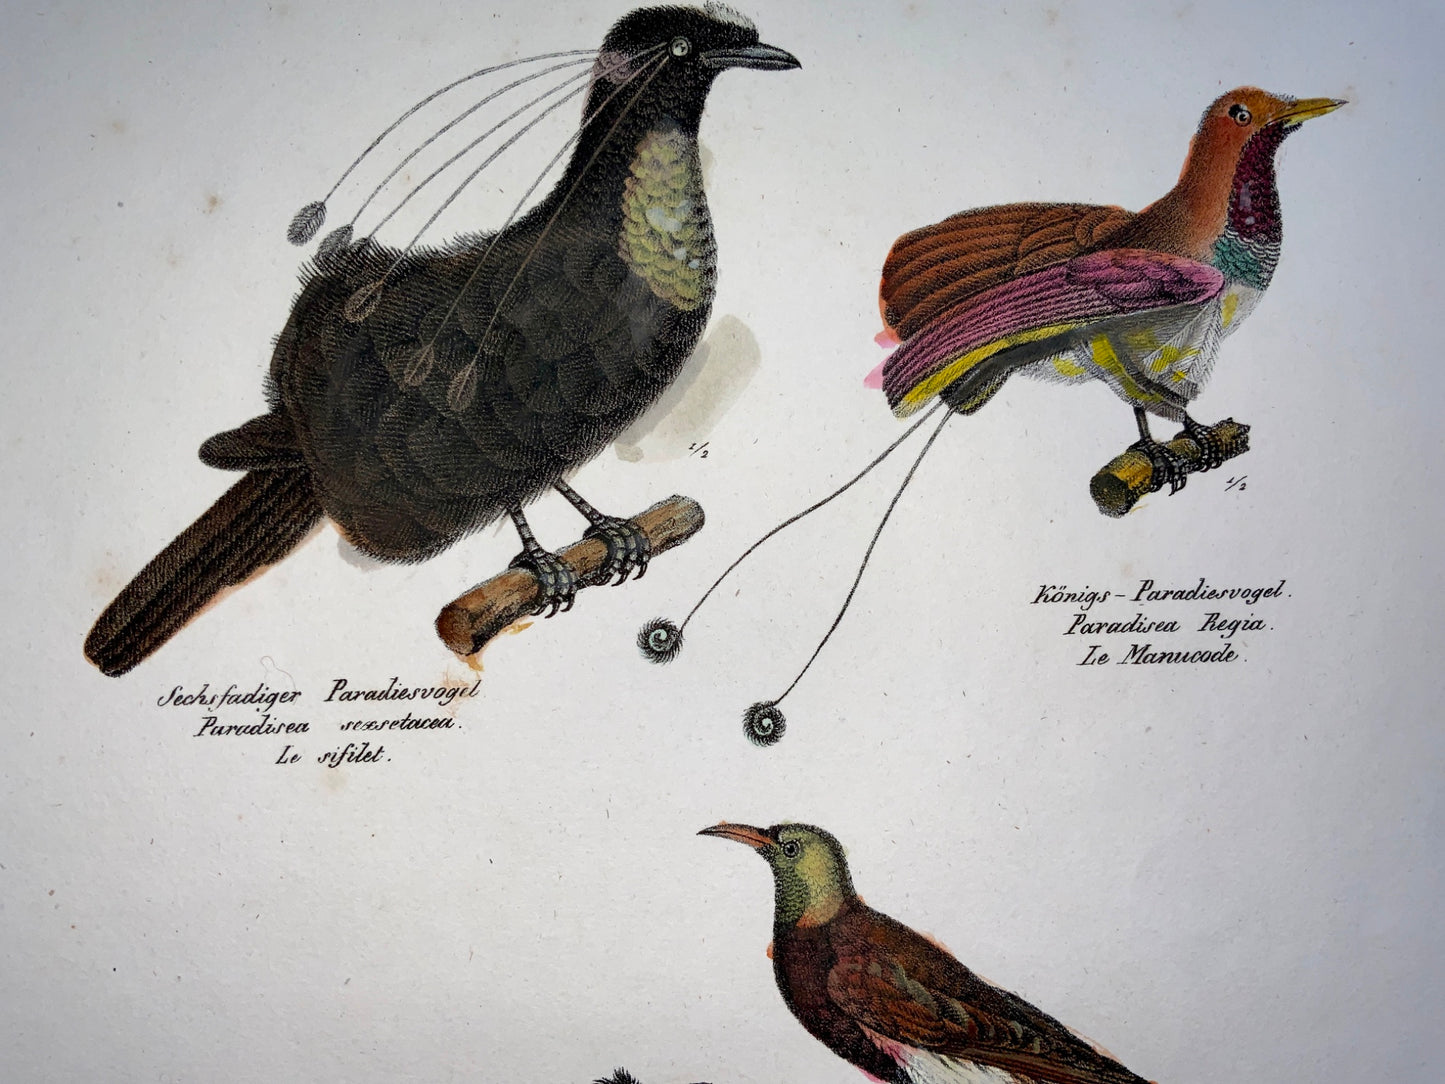 1830 BIRDS of PARADISE Ornithology Brodtmann hand coloured FOLIO lithograph